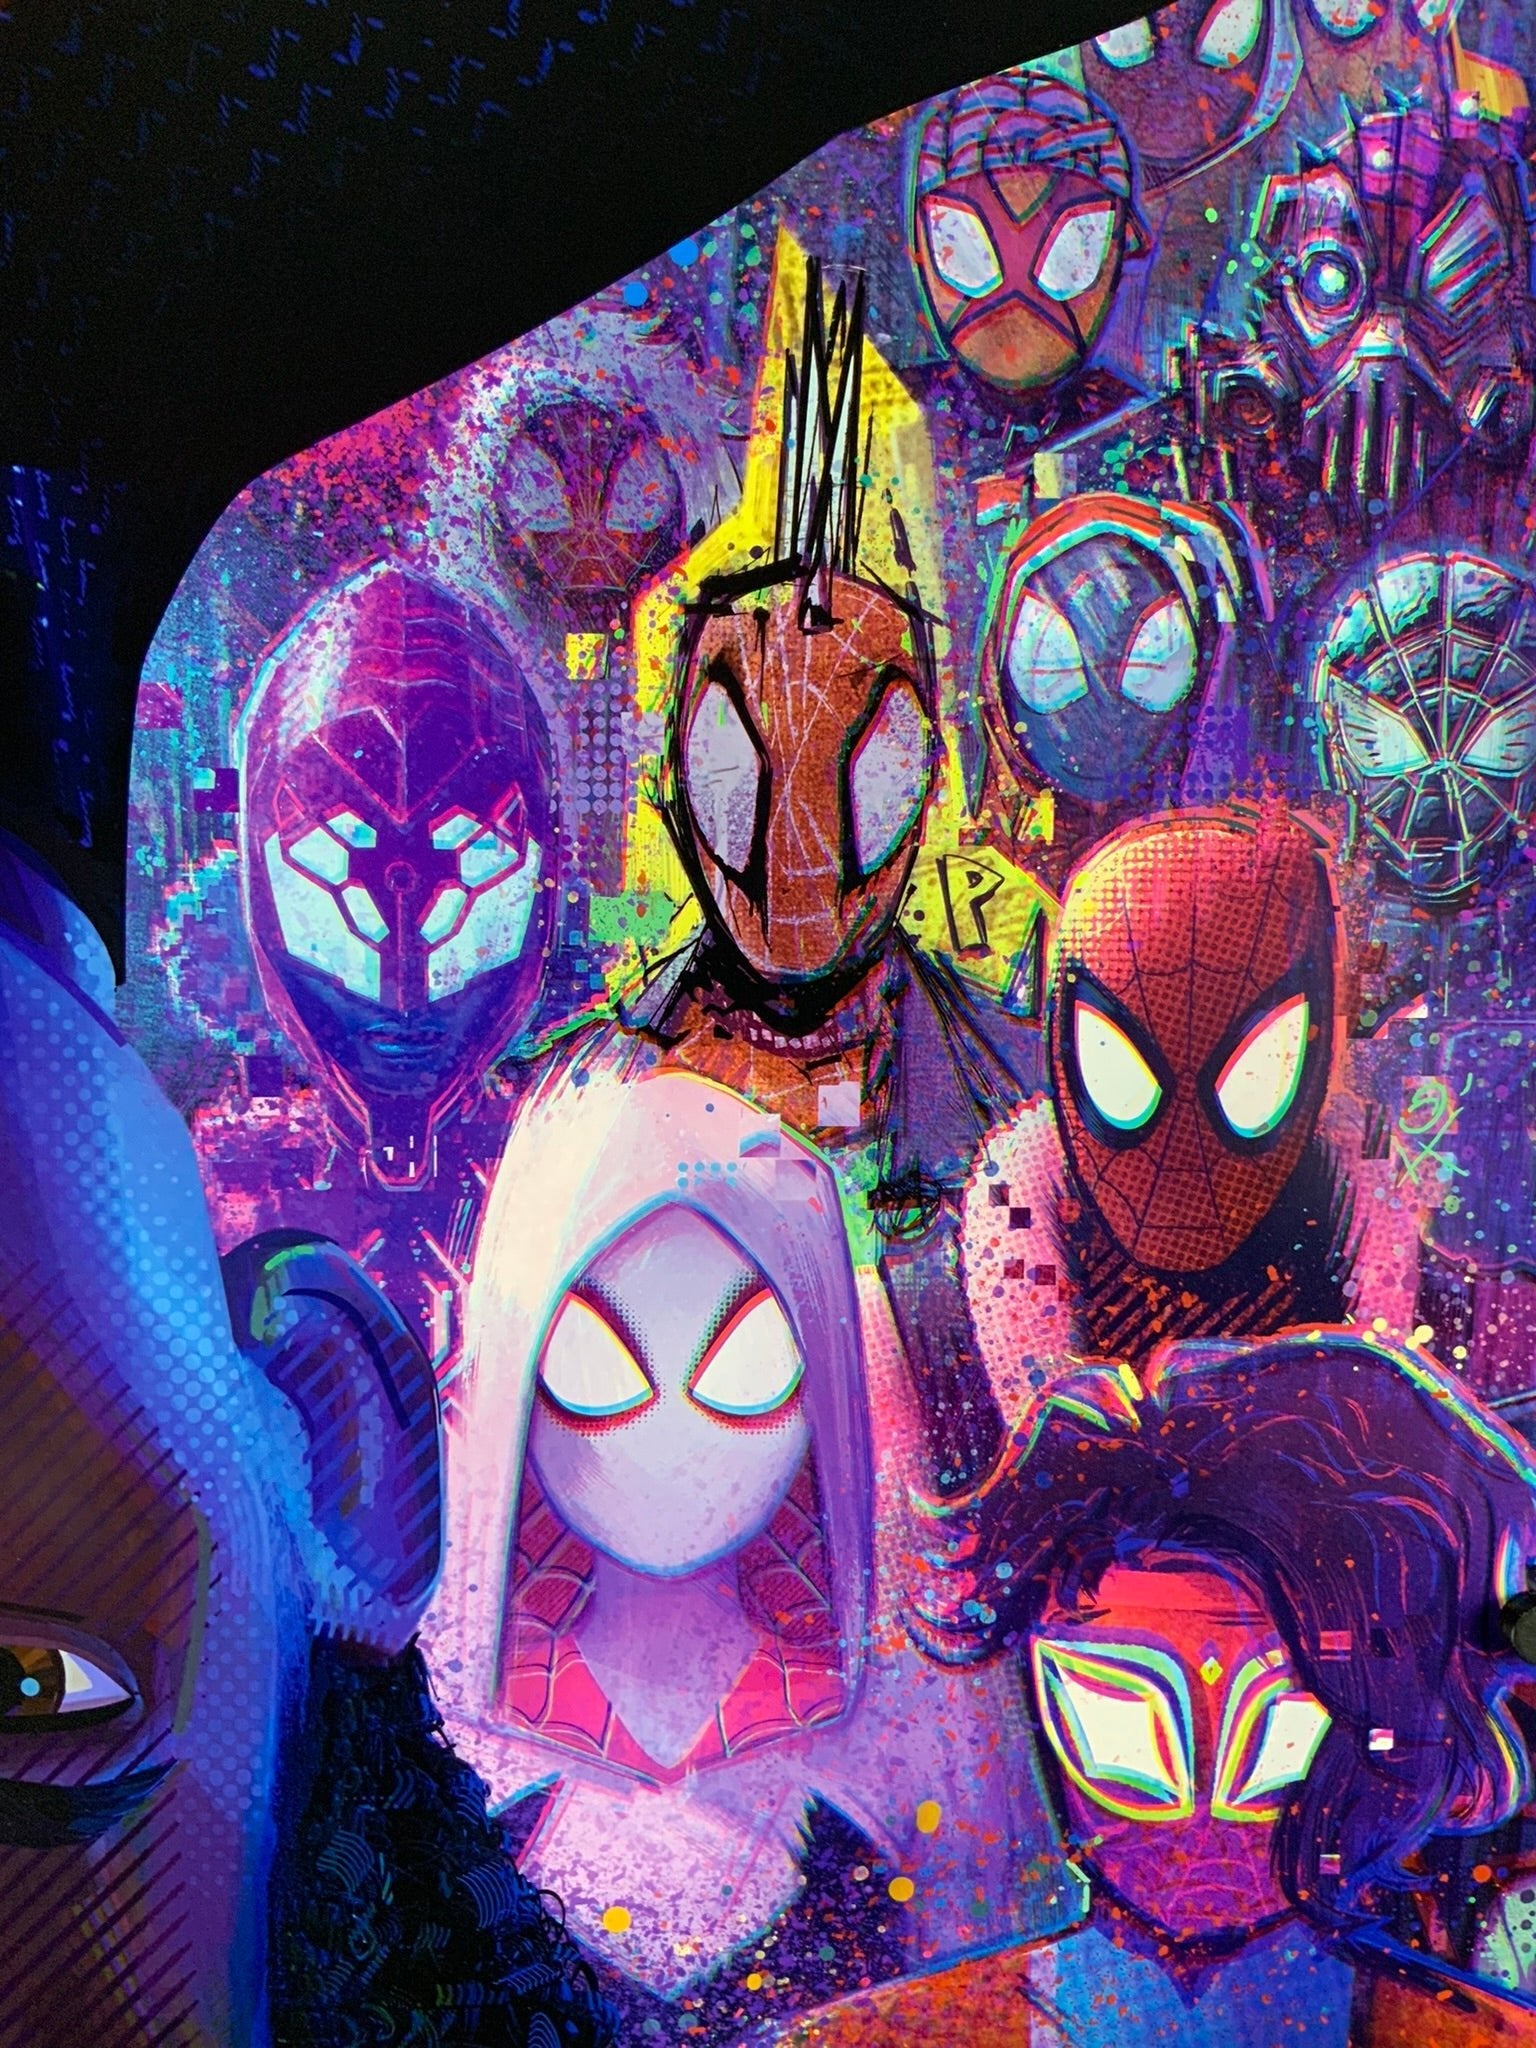 Poster SPIDERMAN 2 - teaser, Wall Art, Gifts & Merchandise